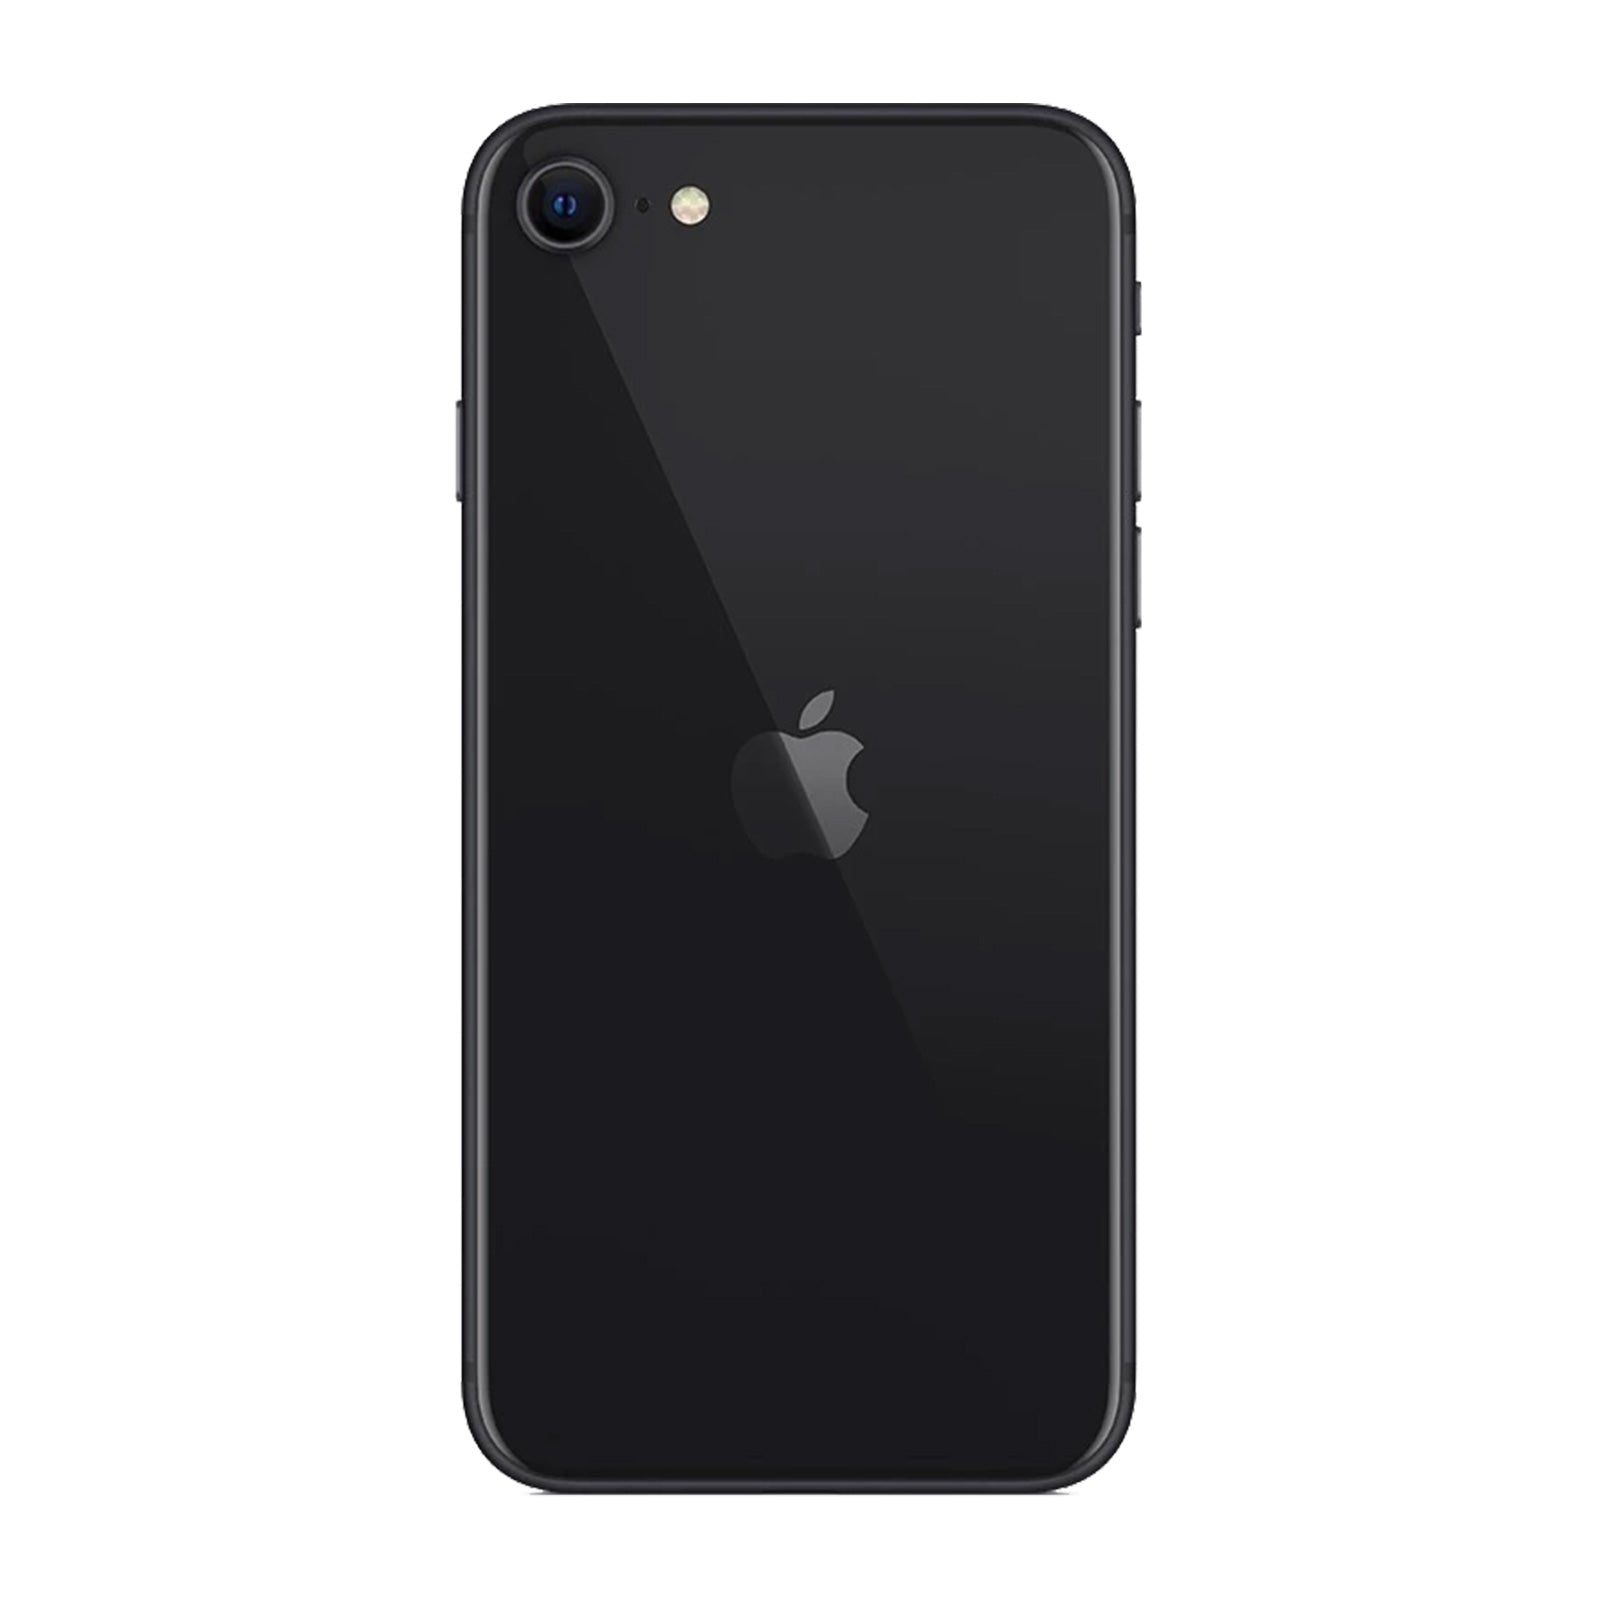 Apple iPhone SE 2nd Gen 256GB Black Good AT&T